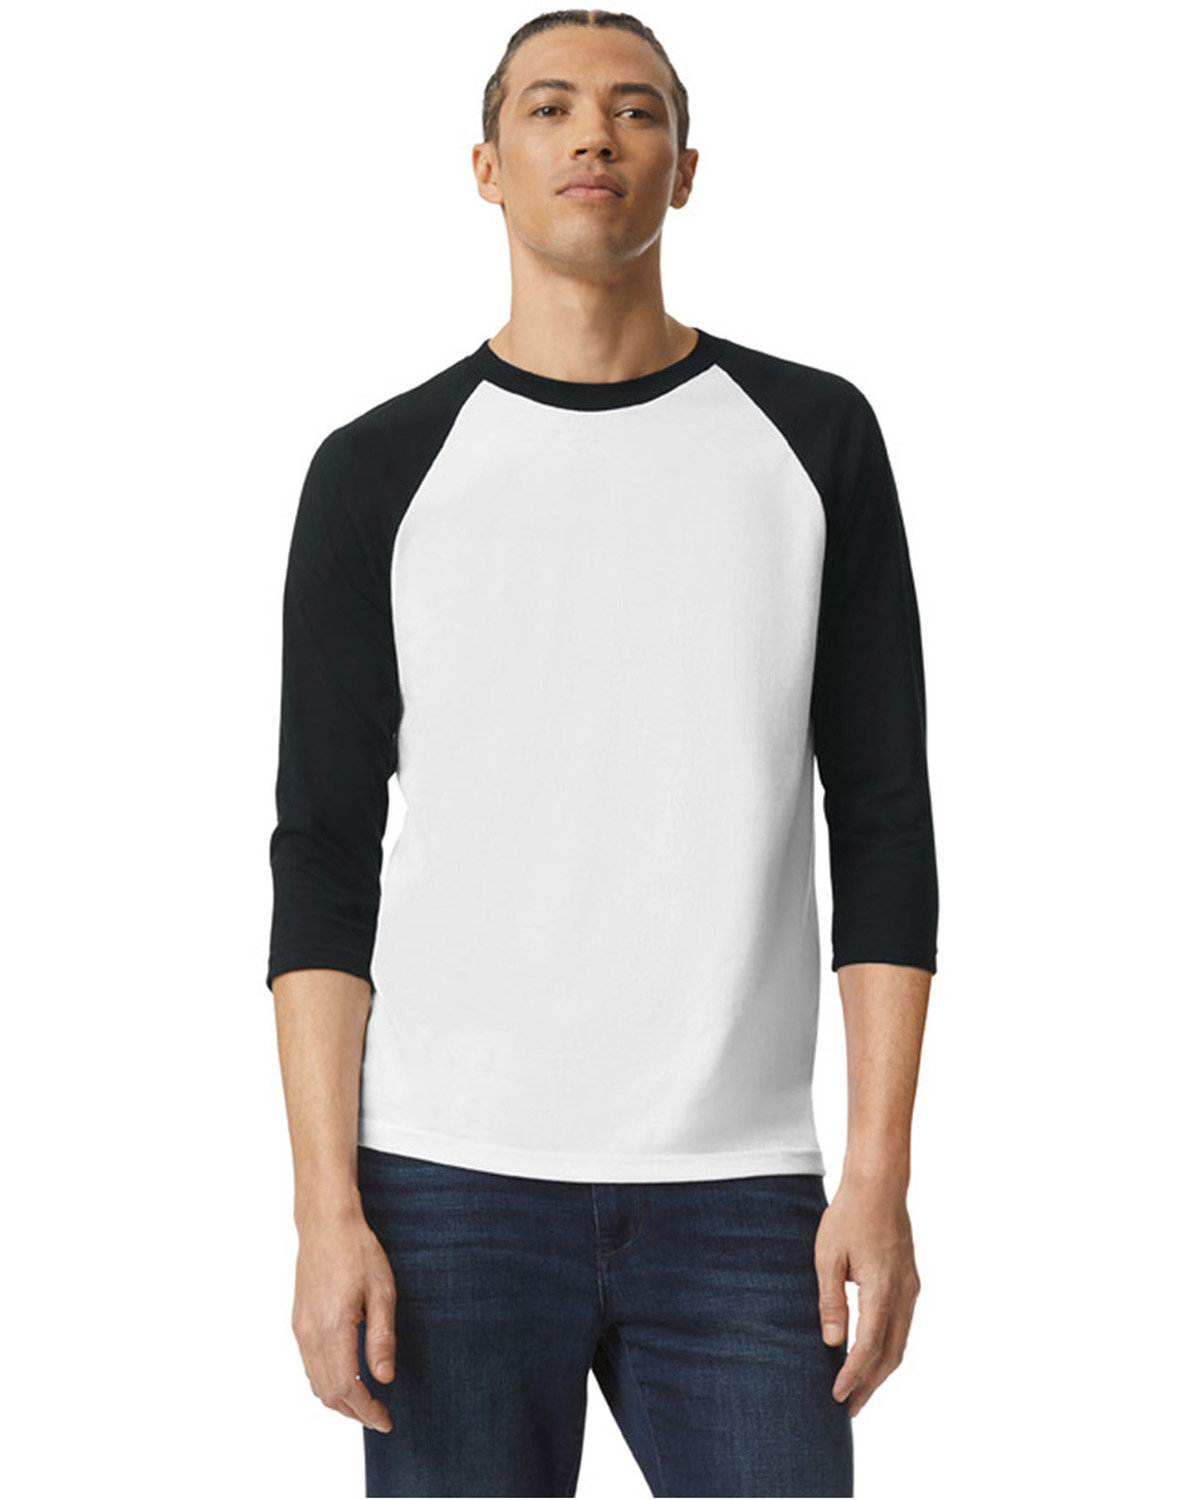 American Apparel Unisex CVC Raglan T-Shirt WHITE/ BLACK 